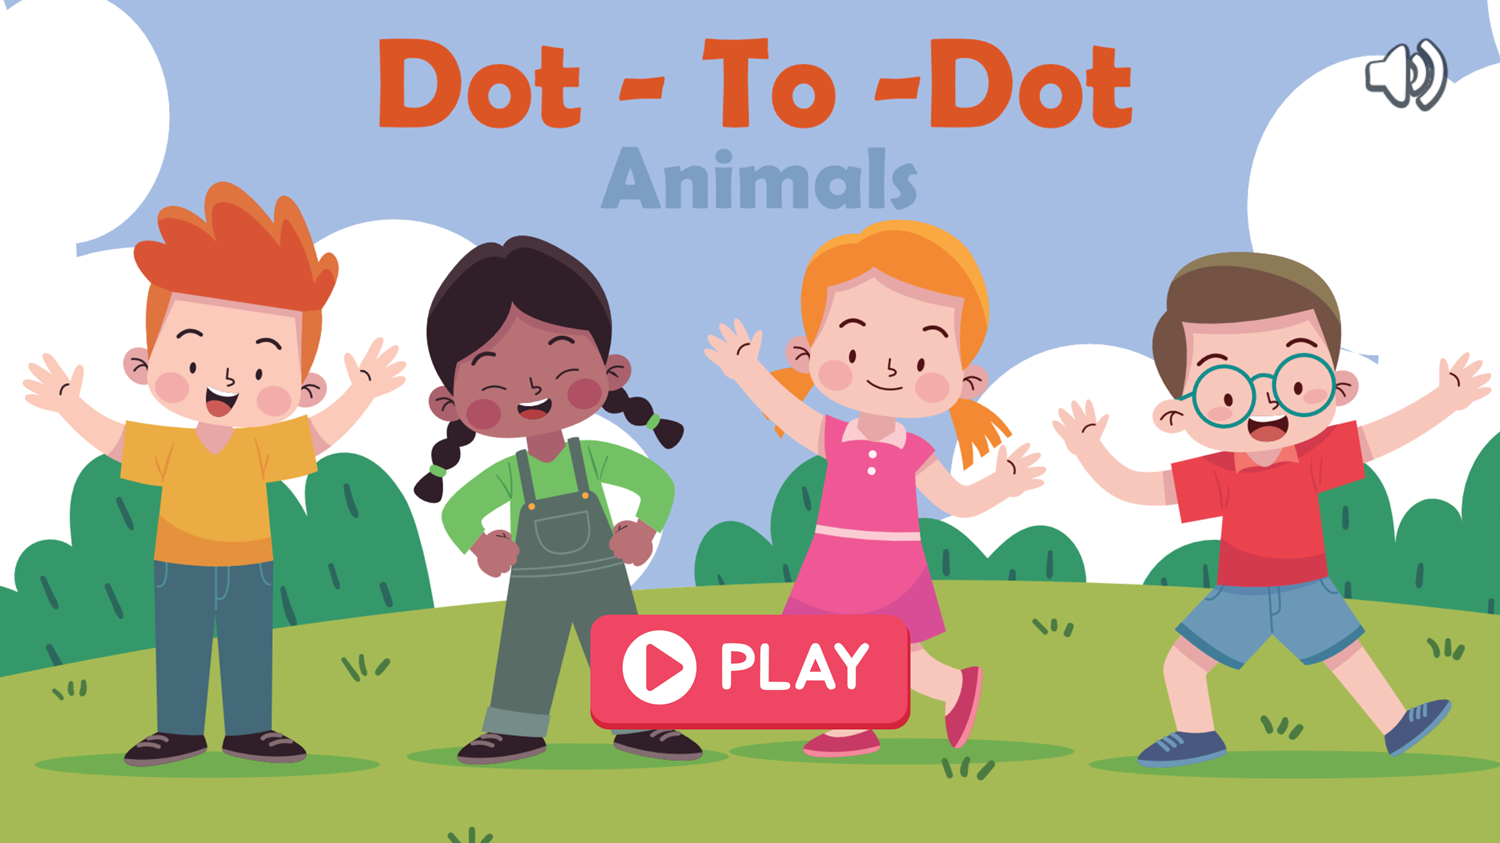 Dot to Dot Animals Game Welcome Screen Screenshot.